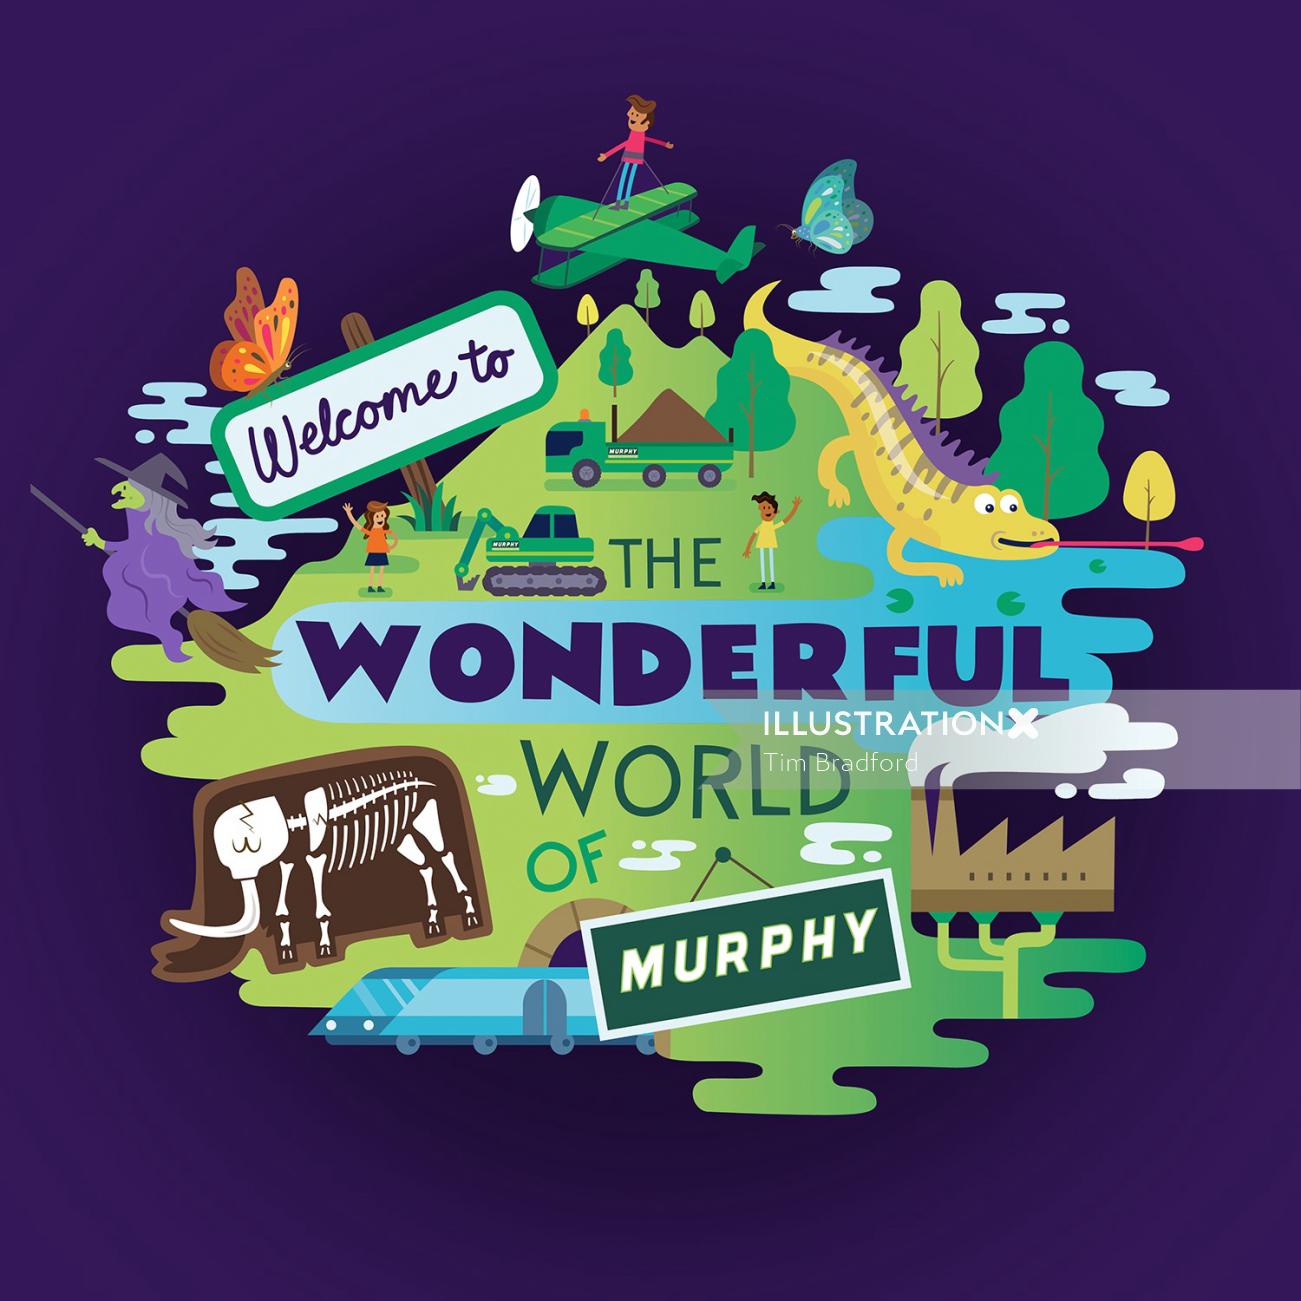 Wonderful world of Murphy map illustration